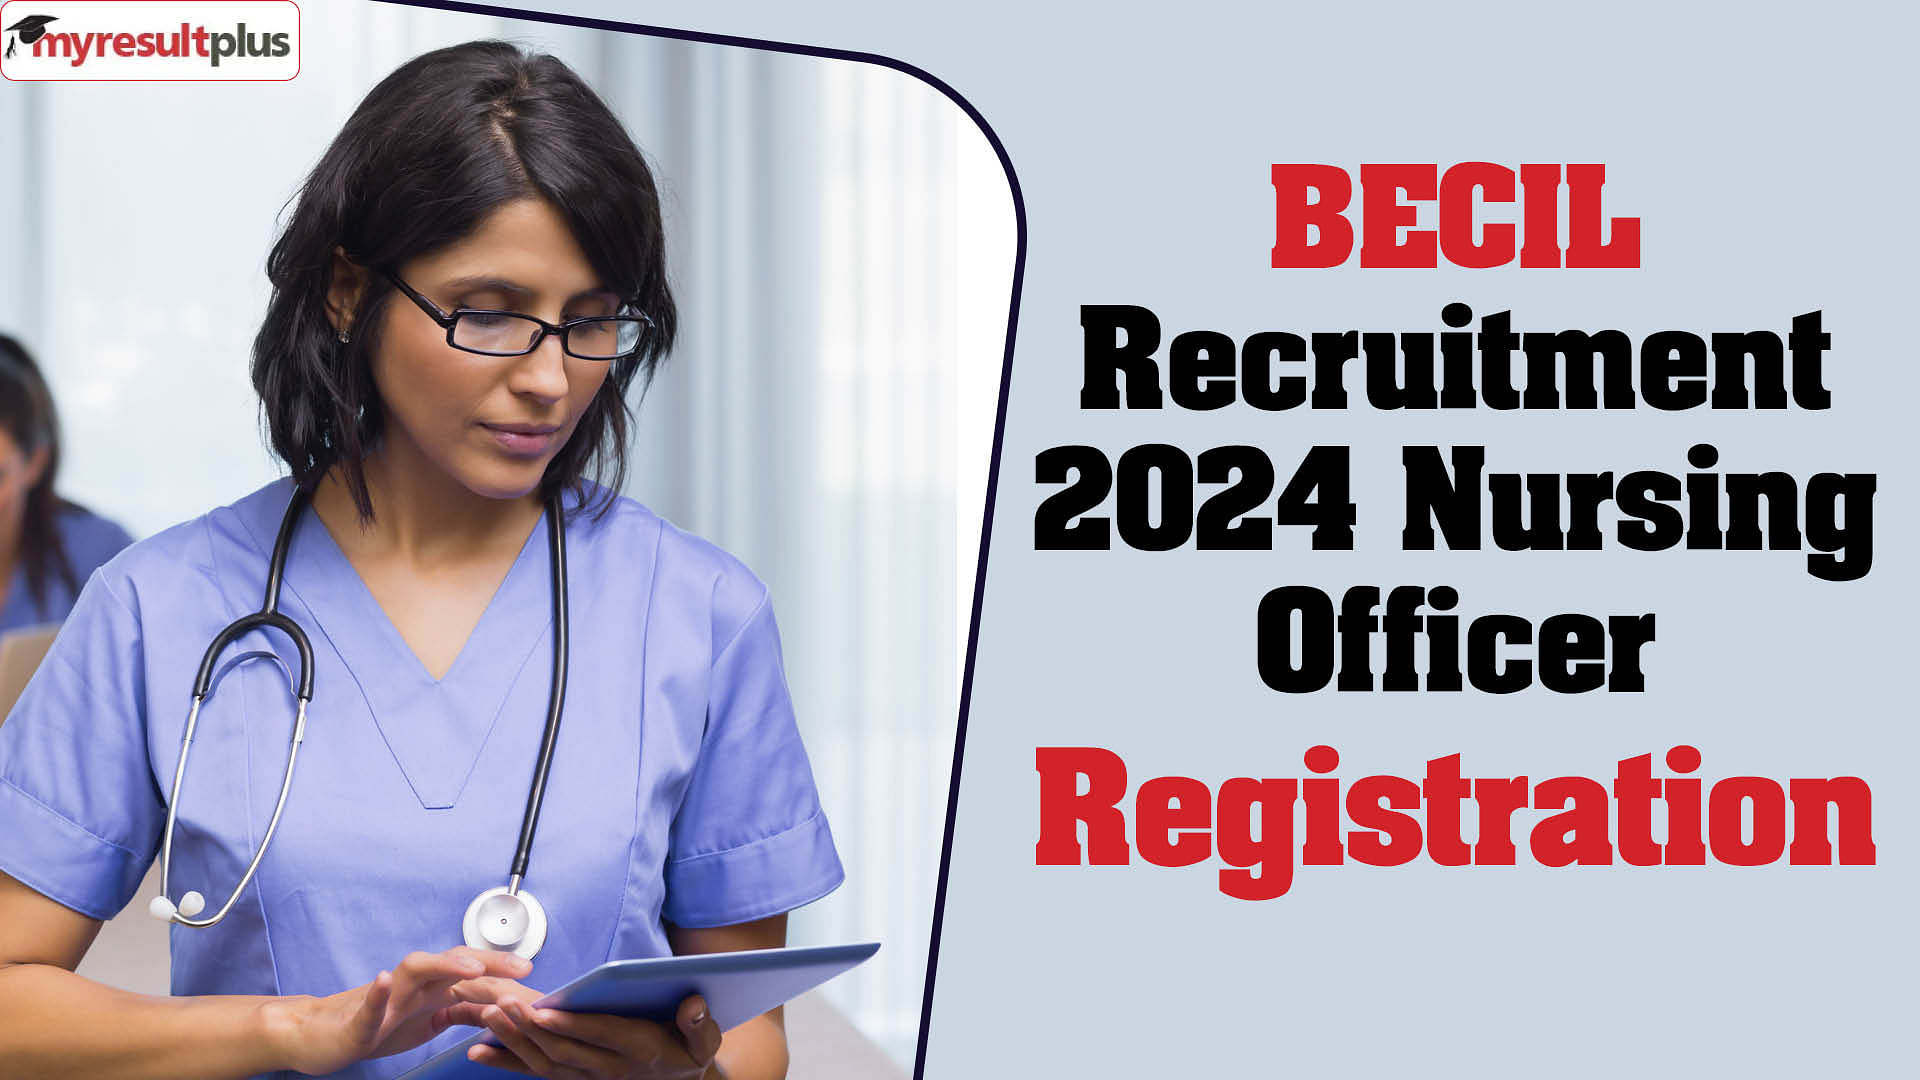 BECIL Recruitment 2024: Nursing Officer Registration ends today; here’s the details